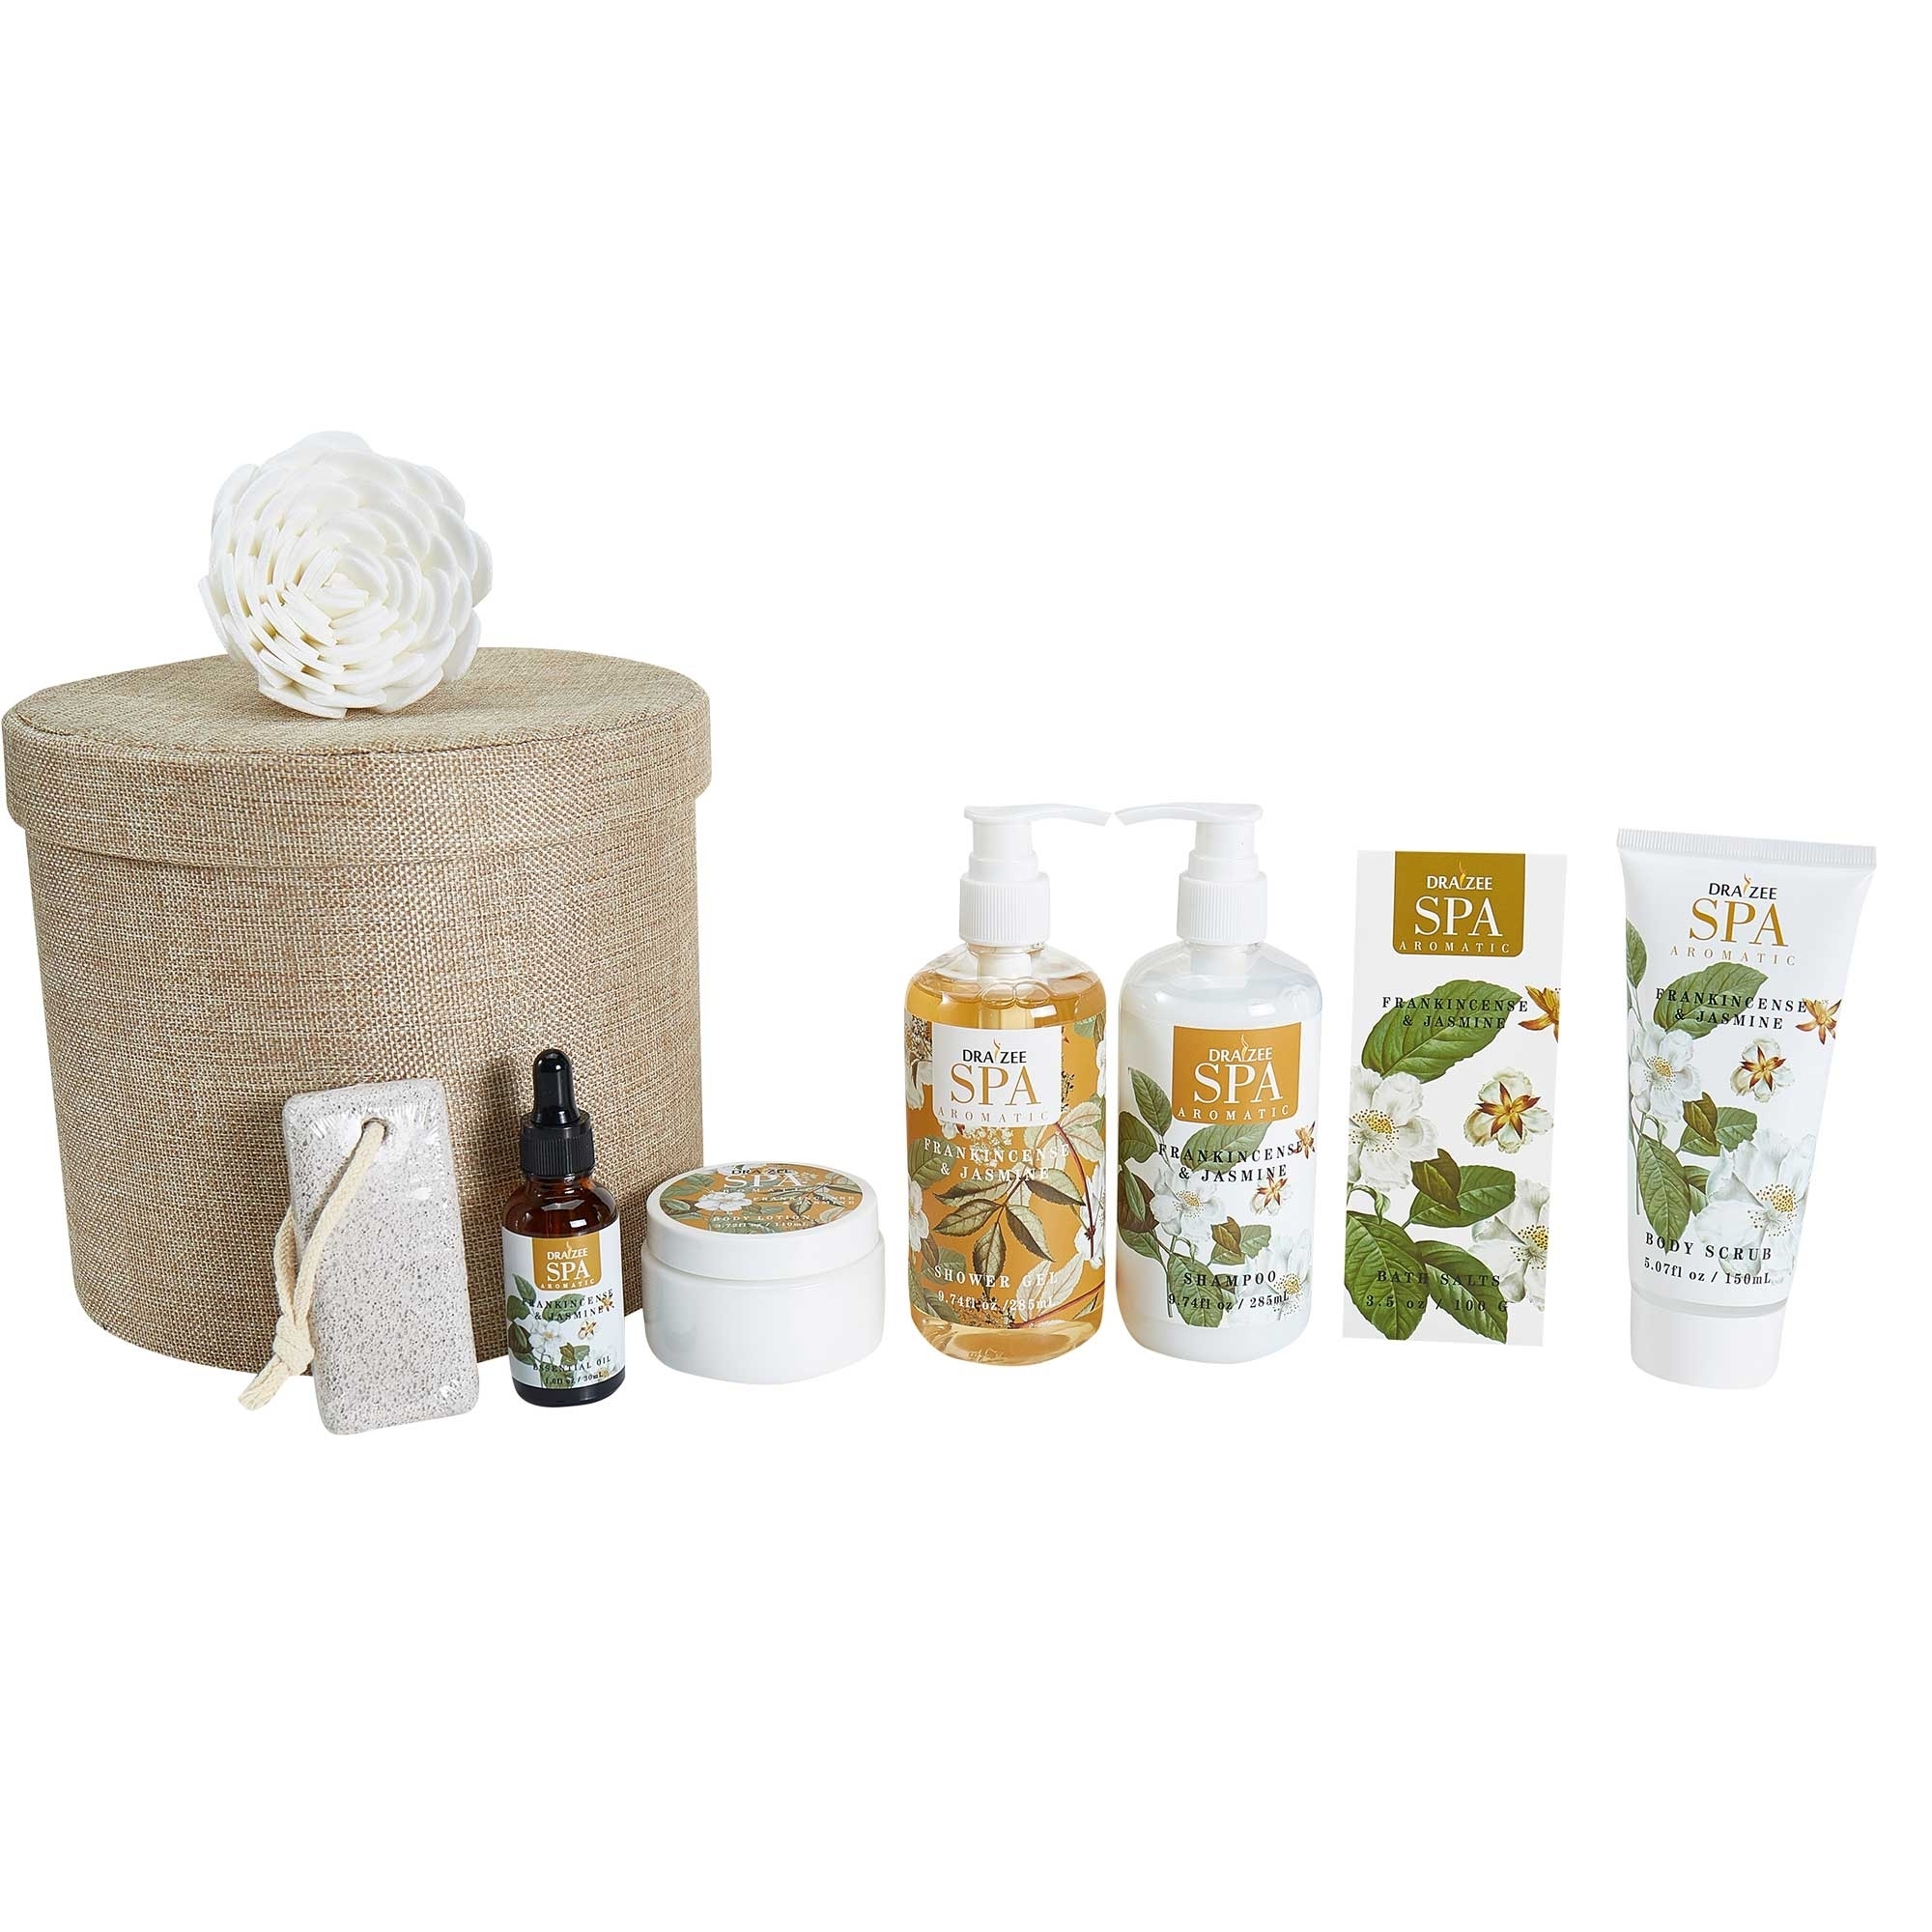 Draizee 8 Pieces Luxury Skin Care Bath Gift Set For Women W/ Refreshing Princess Flower Fragrance Includes Shower Gel, Shampoo, Body Scrub